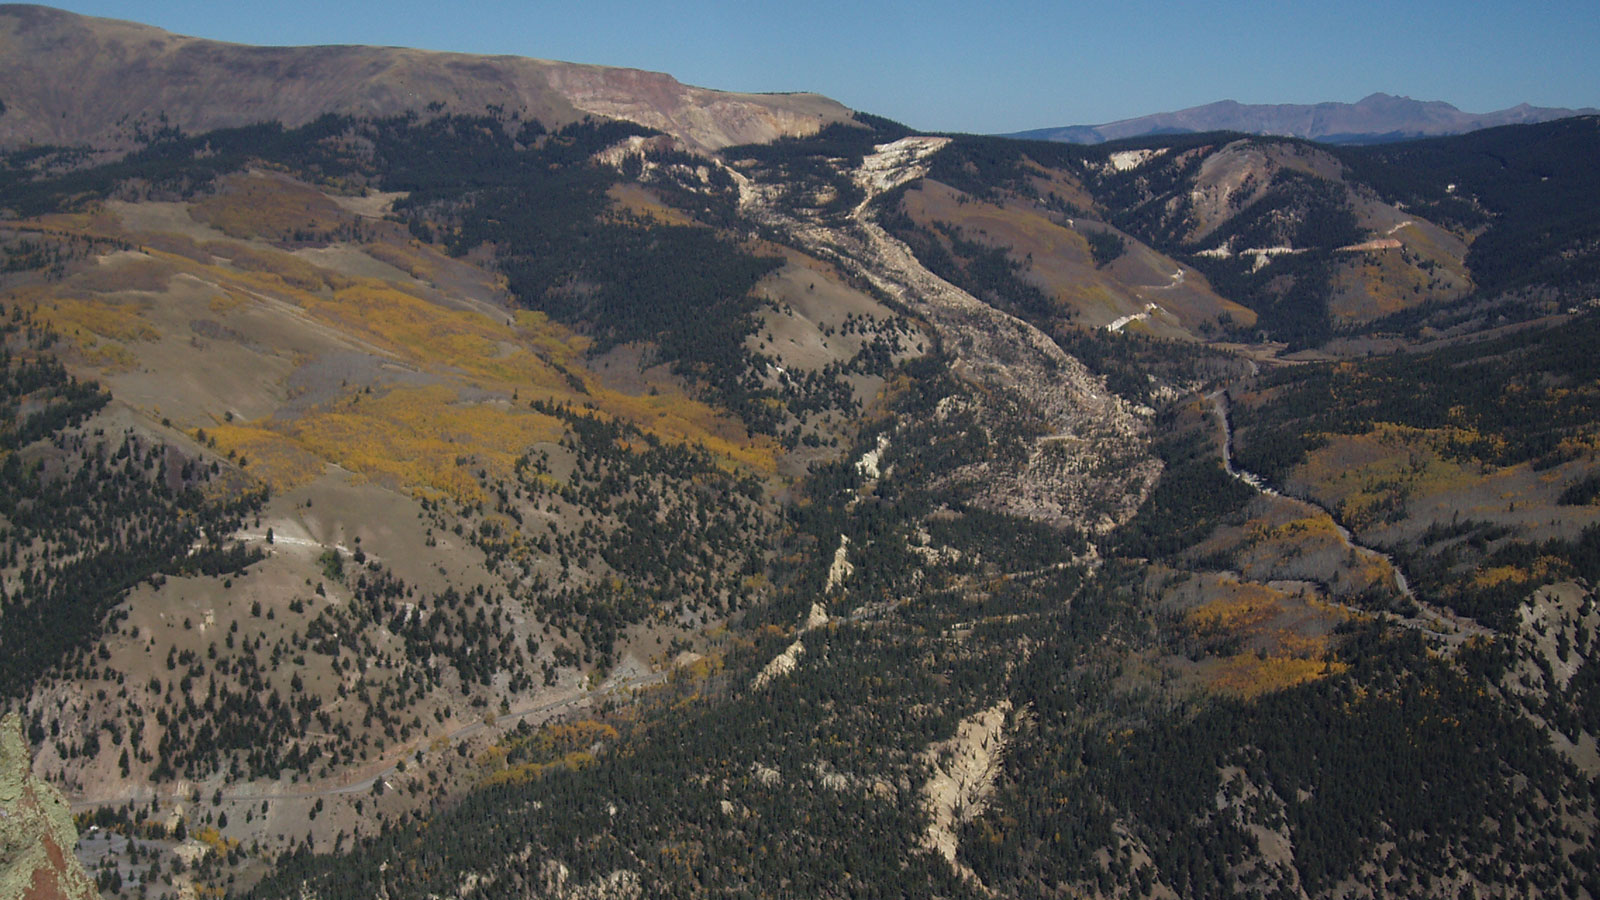 Slumgullion landslide in southwestern Colorado